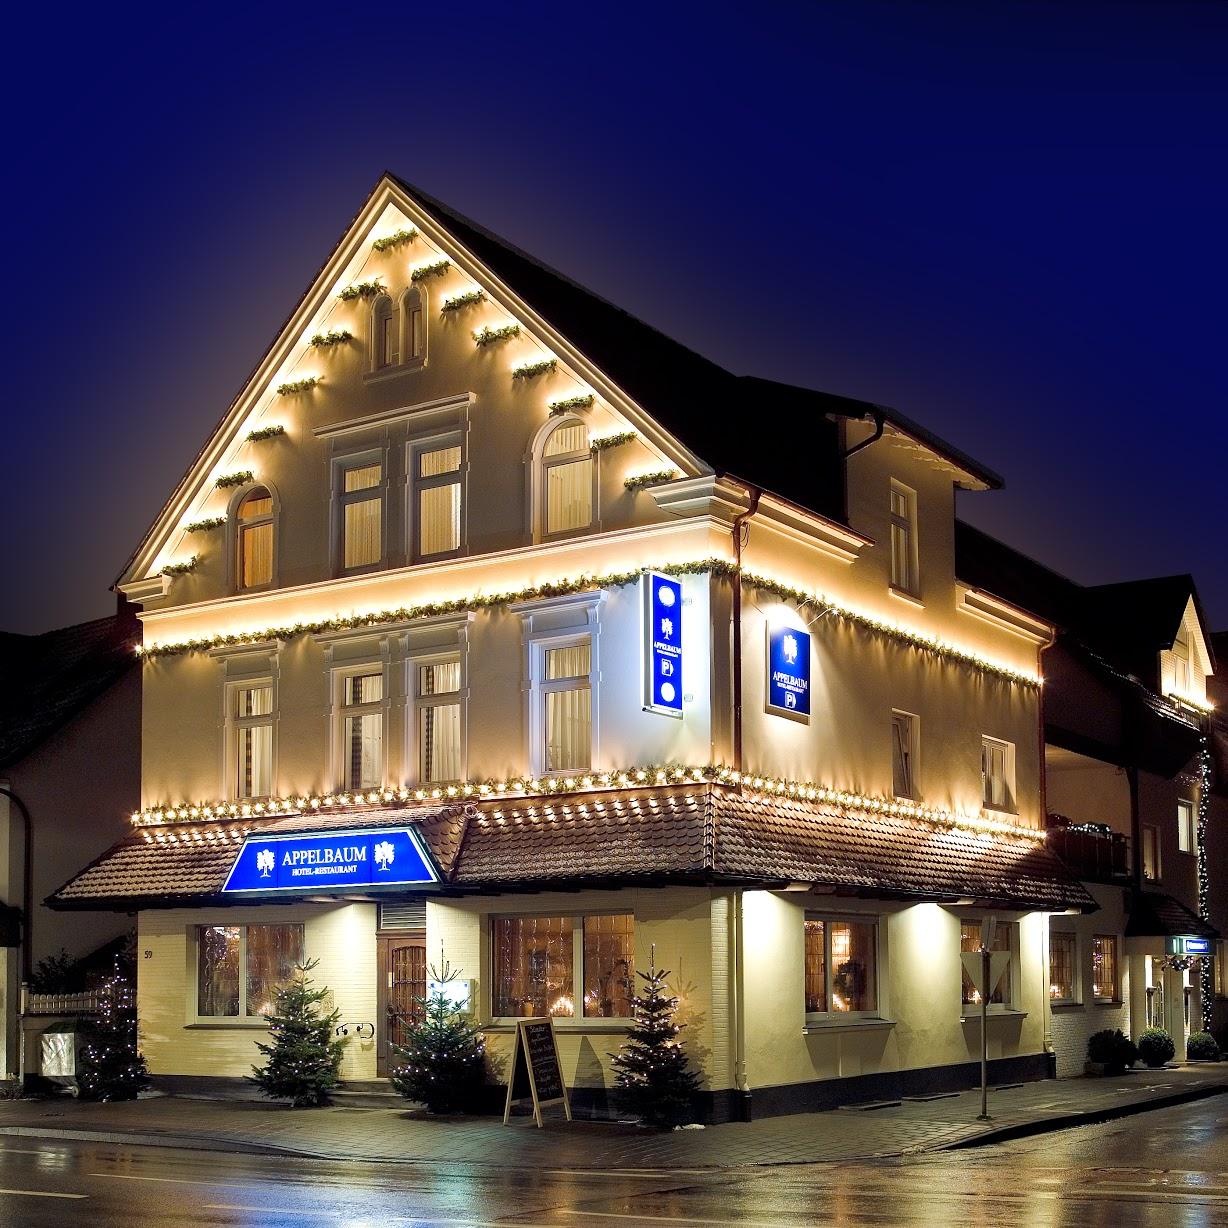 Restaurant "Hotel Appelbaum" in Gütersloh